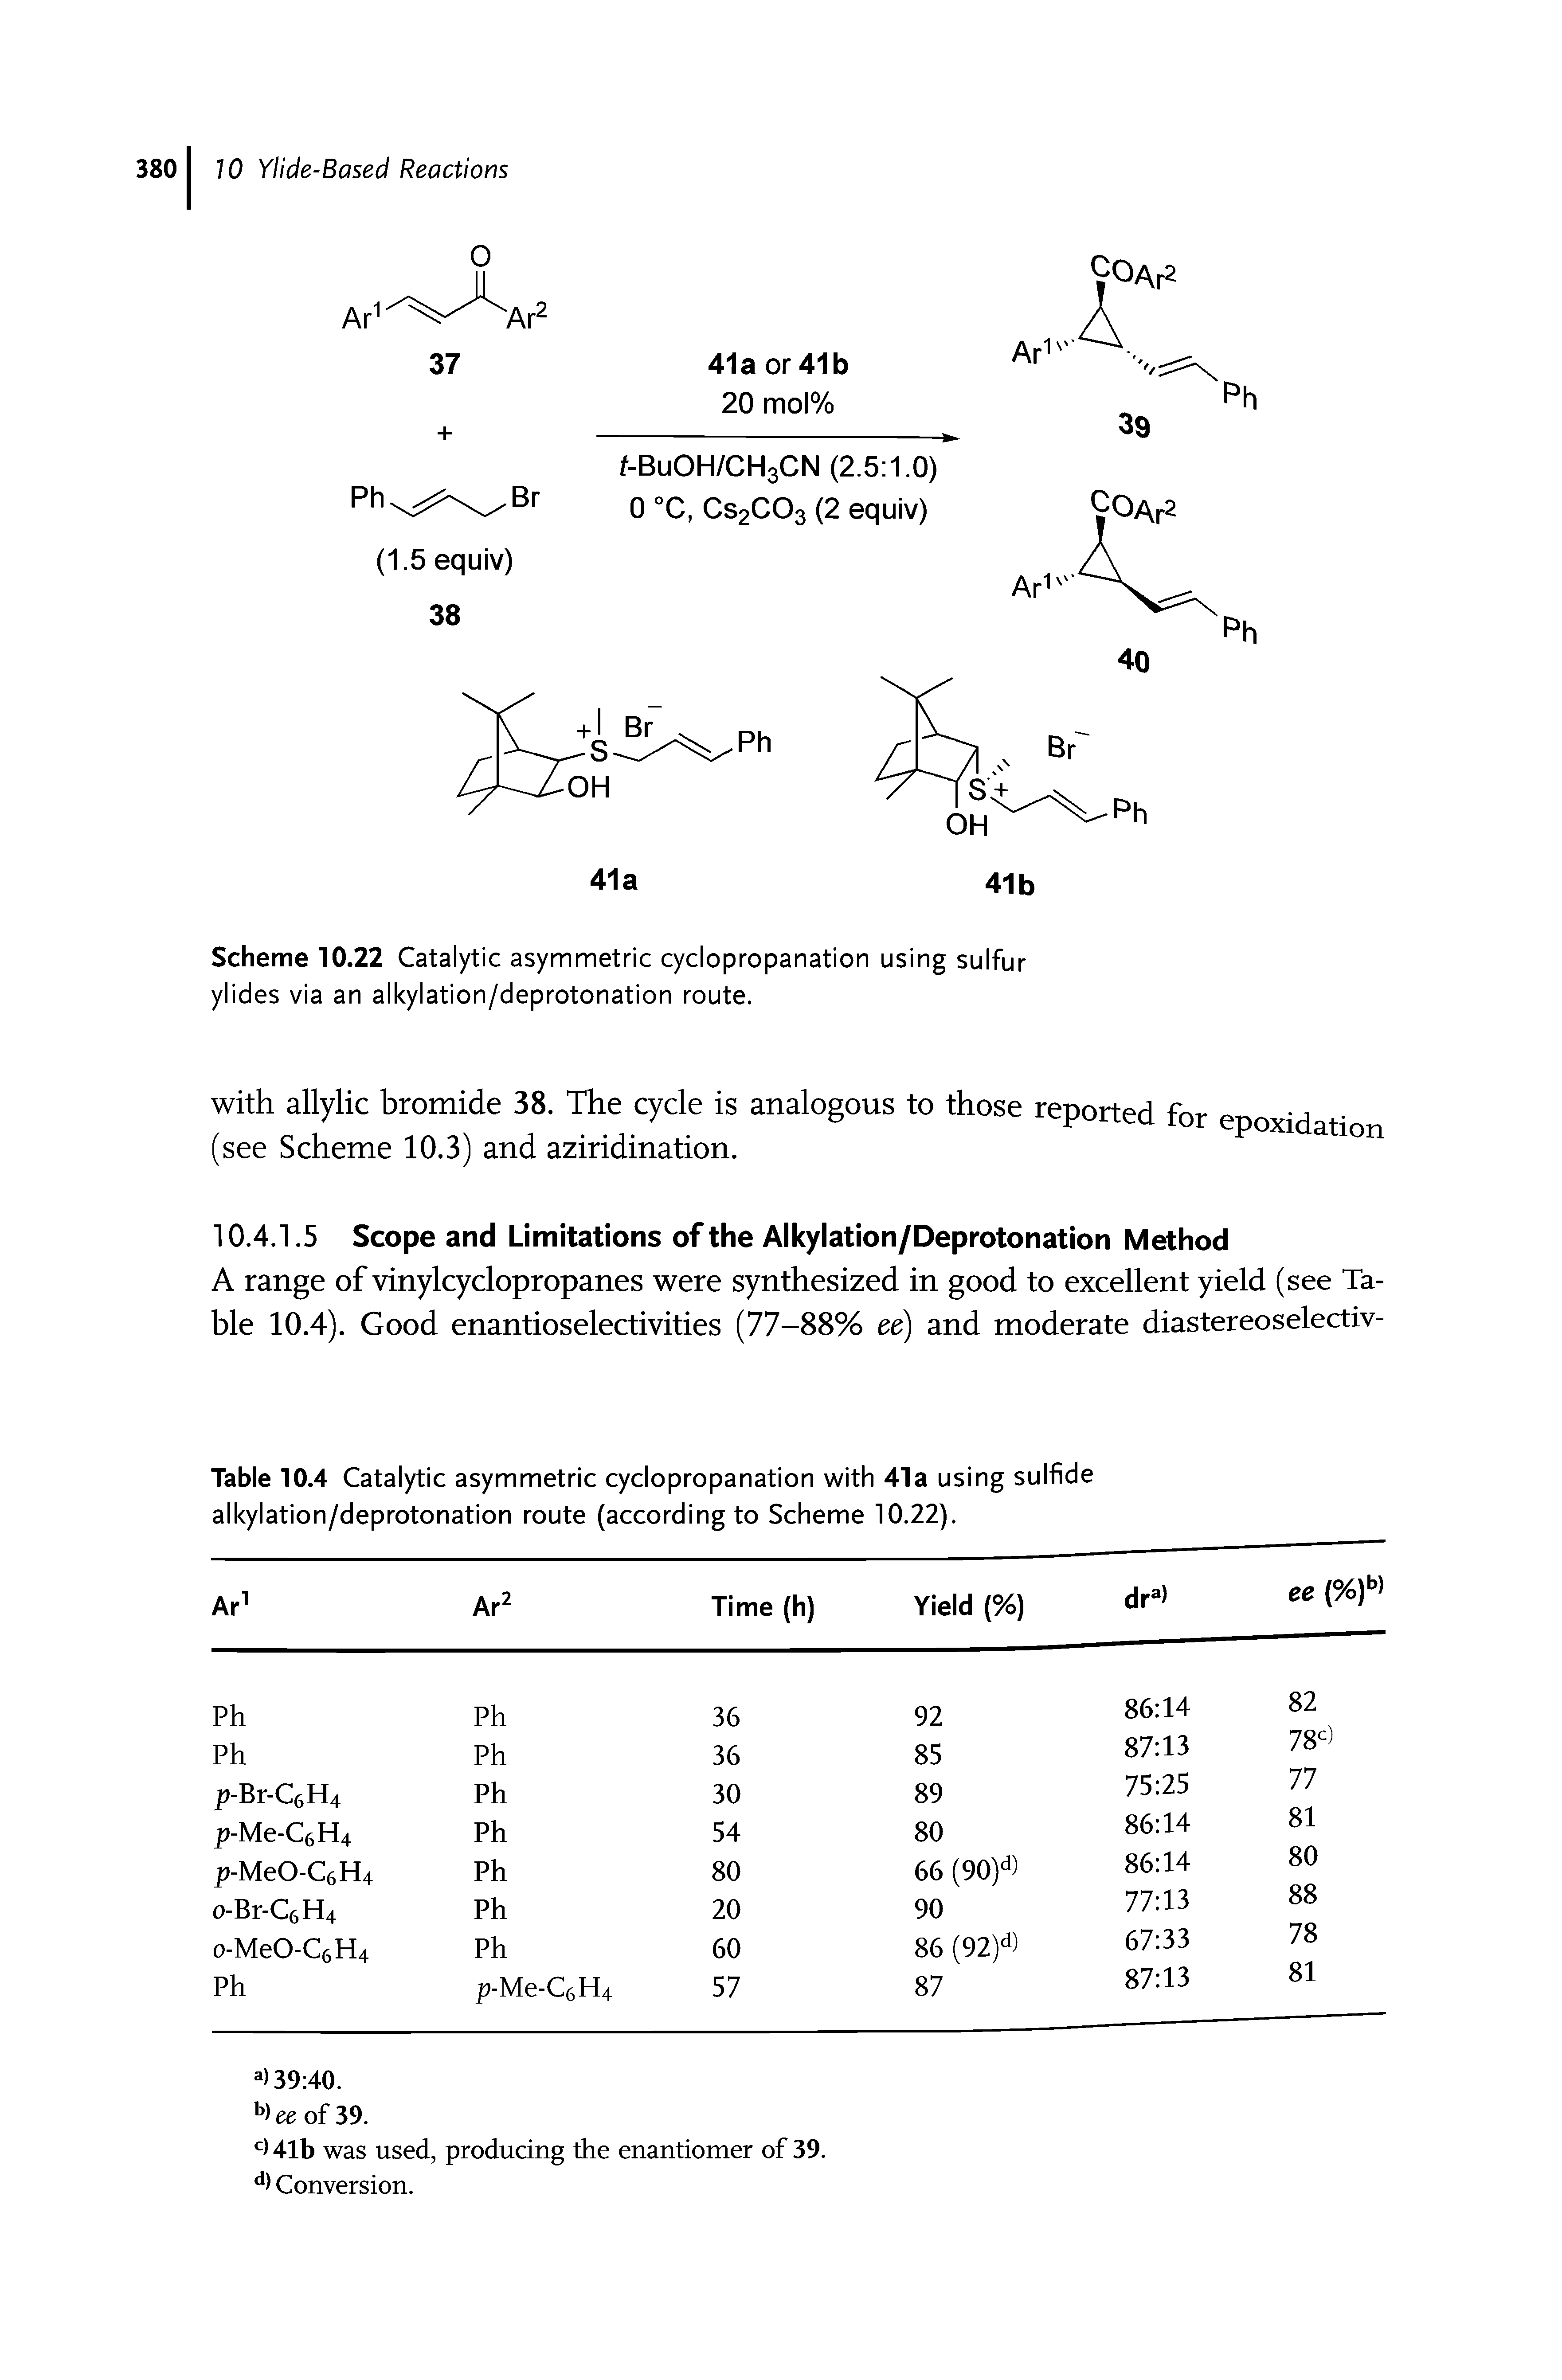 Scheme 10.22 Catalytic asymmetric cyclopropanation using sulfur ylides via an alkylation/deprotonation route.